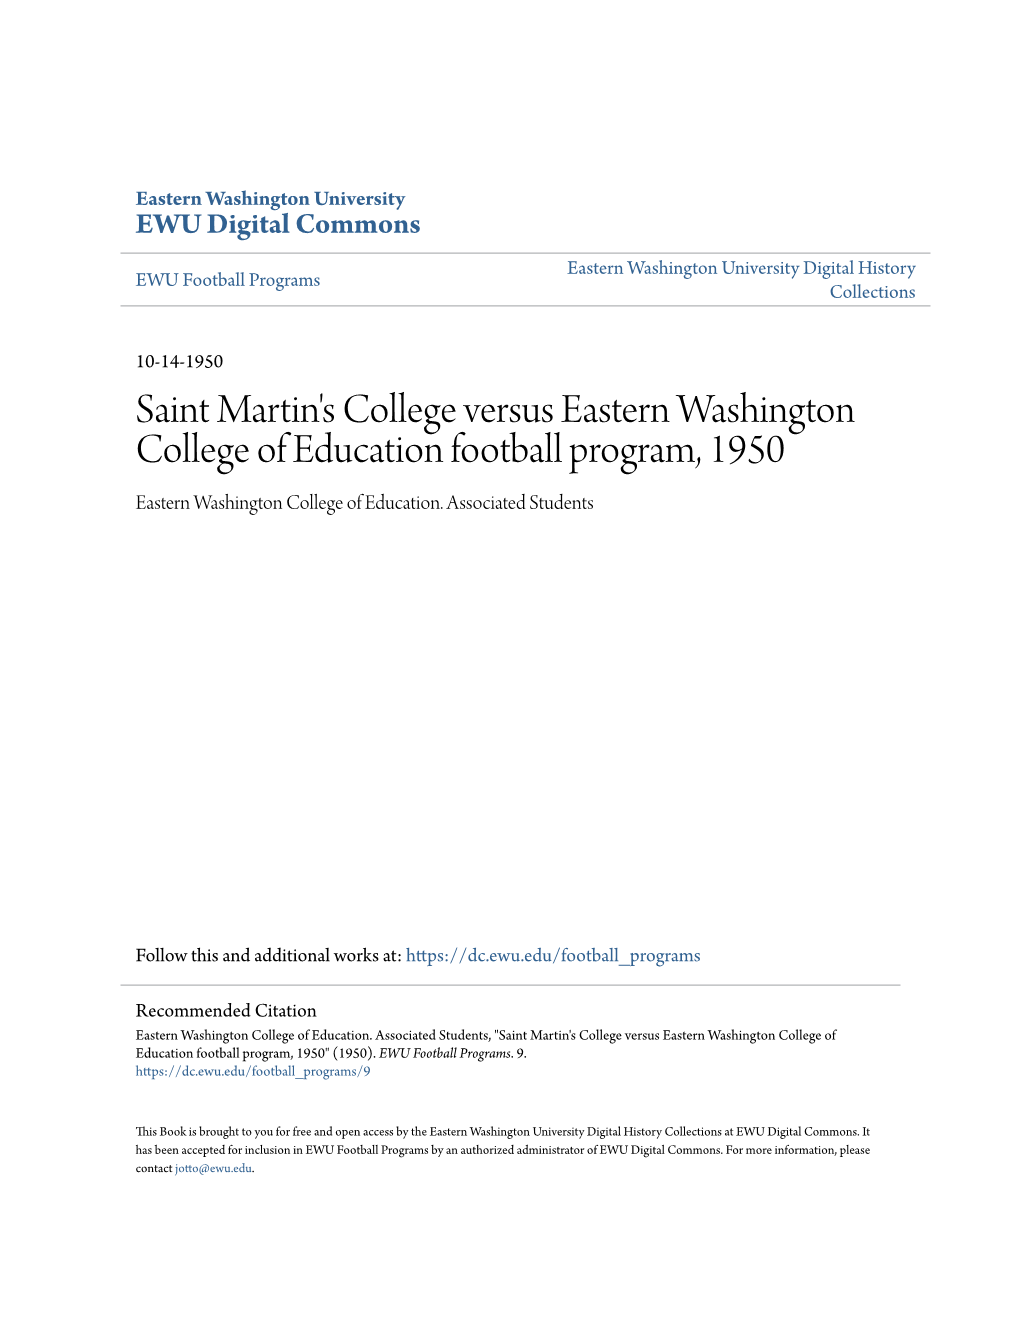 Saint Martin's College Versus Eastern Washington College of Education Football Program, 1950 Eastern Washington College of Education